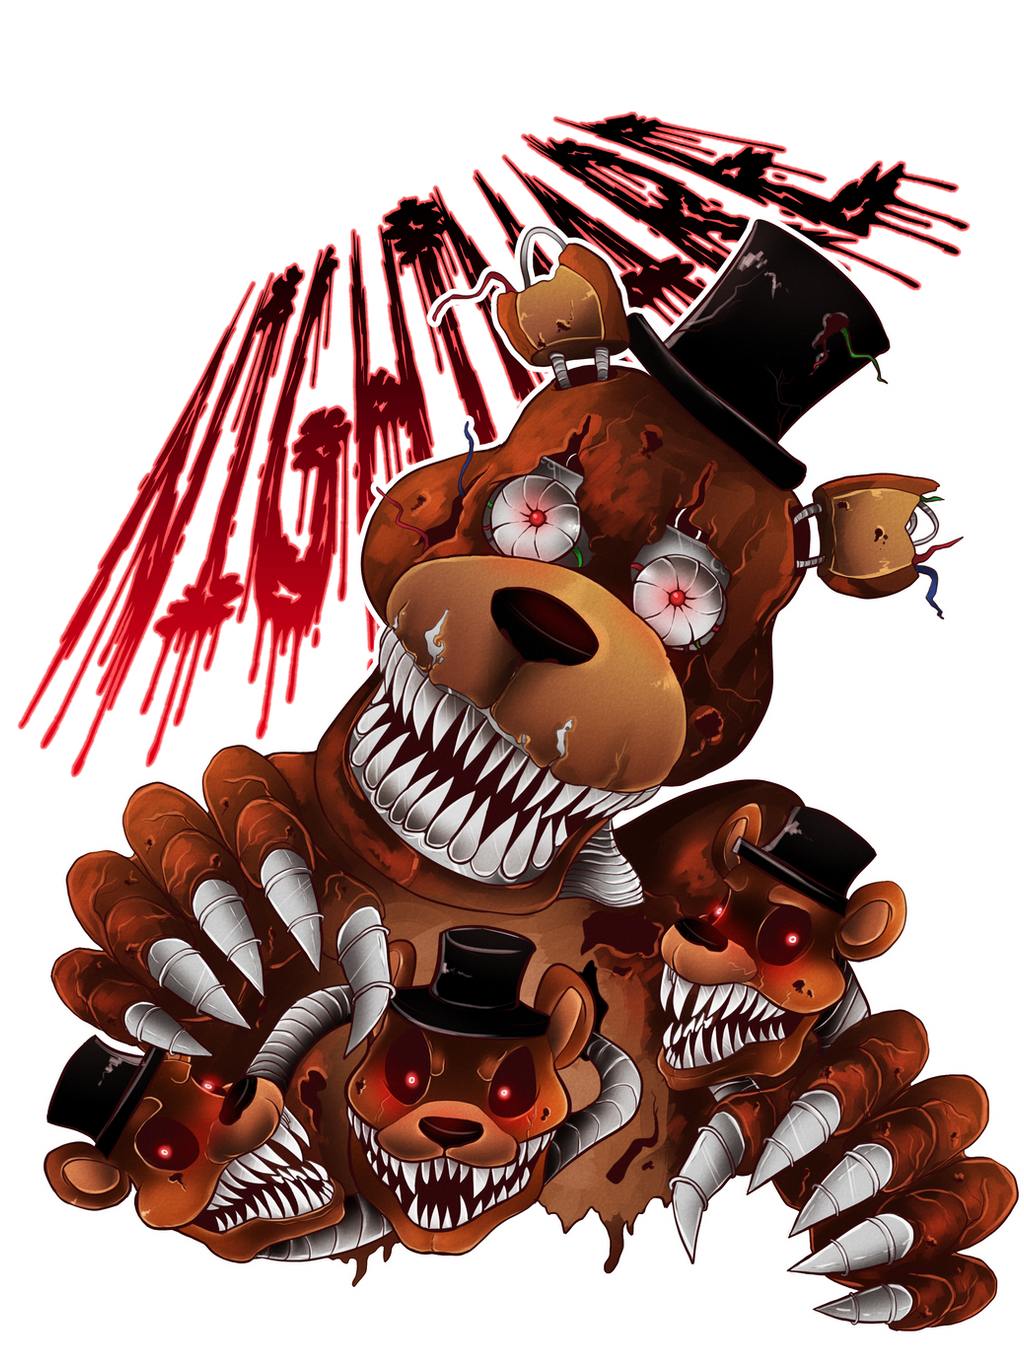 Nightmare Fredbear (five Nights at Freddy's 4) by ArtyJoyful on DeviantArt